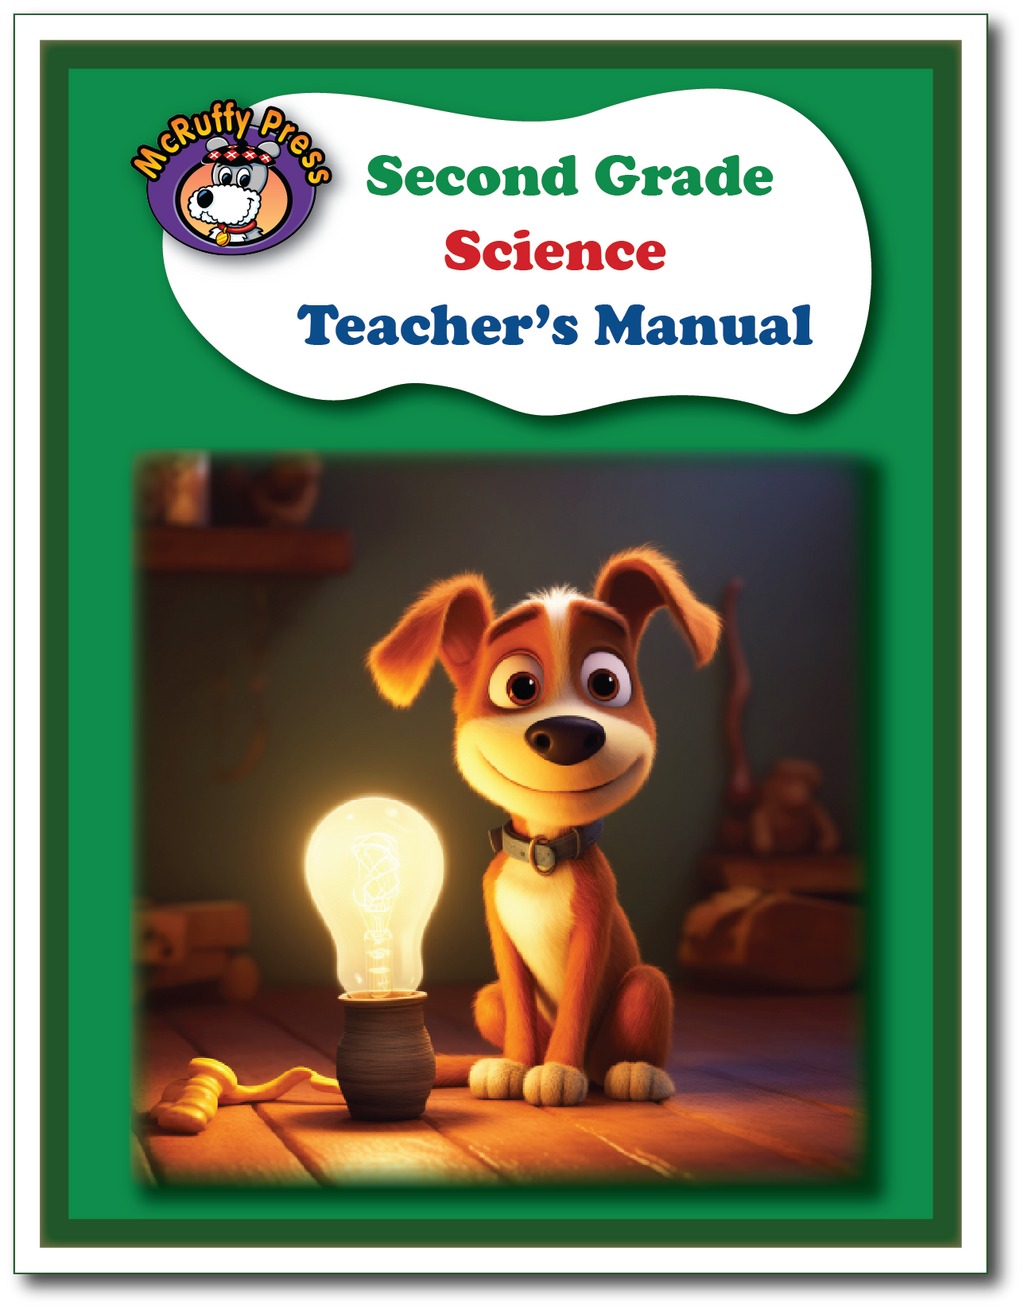 Second Grade Science Teacher's Manual - McRuffy Press